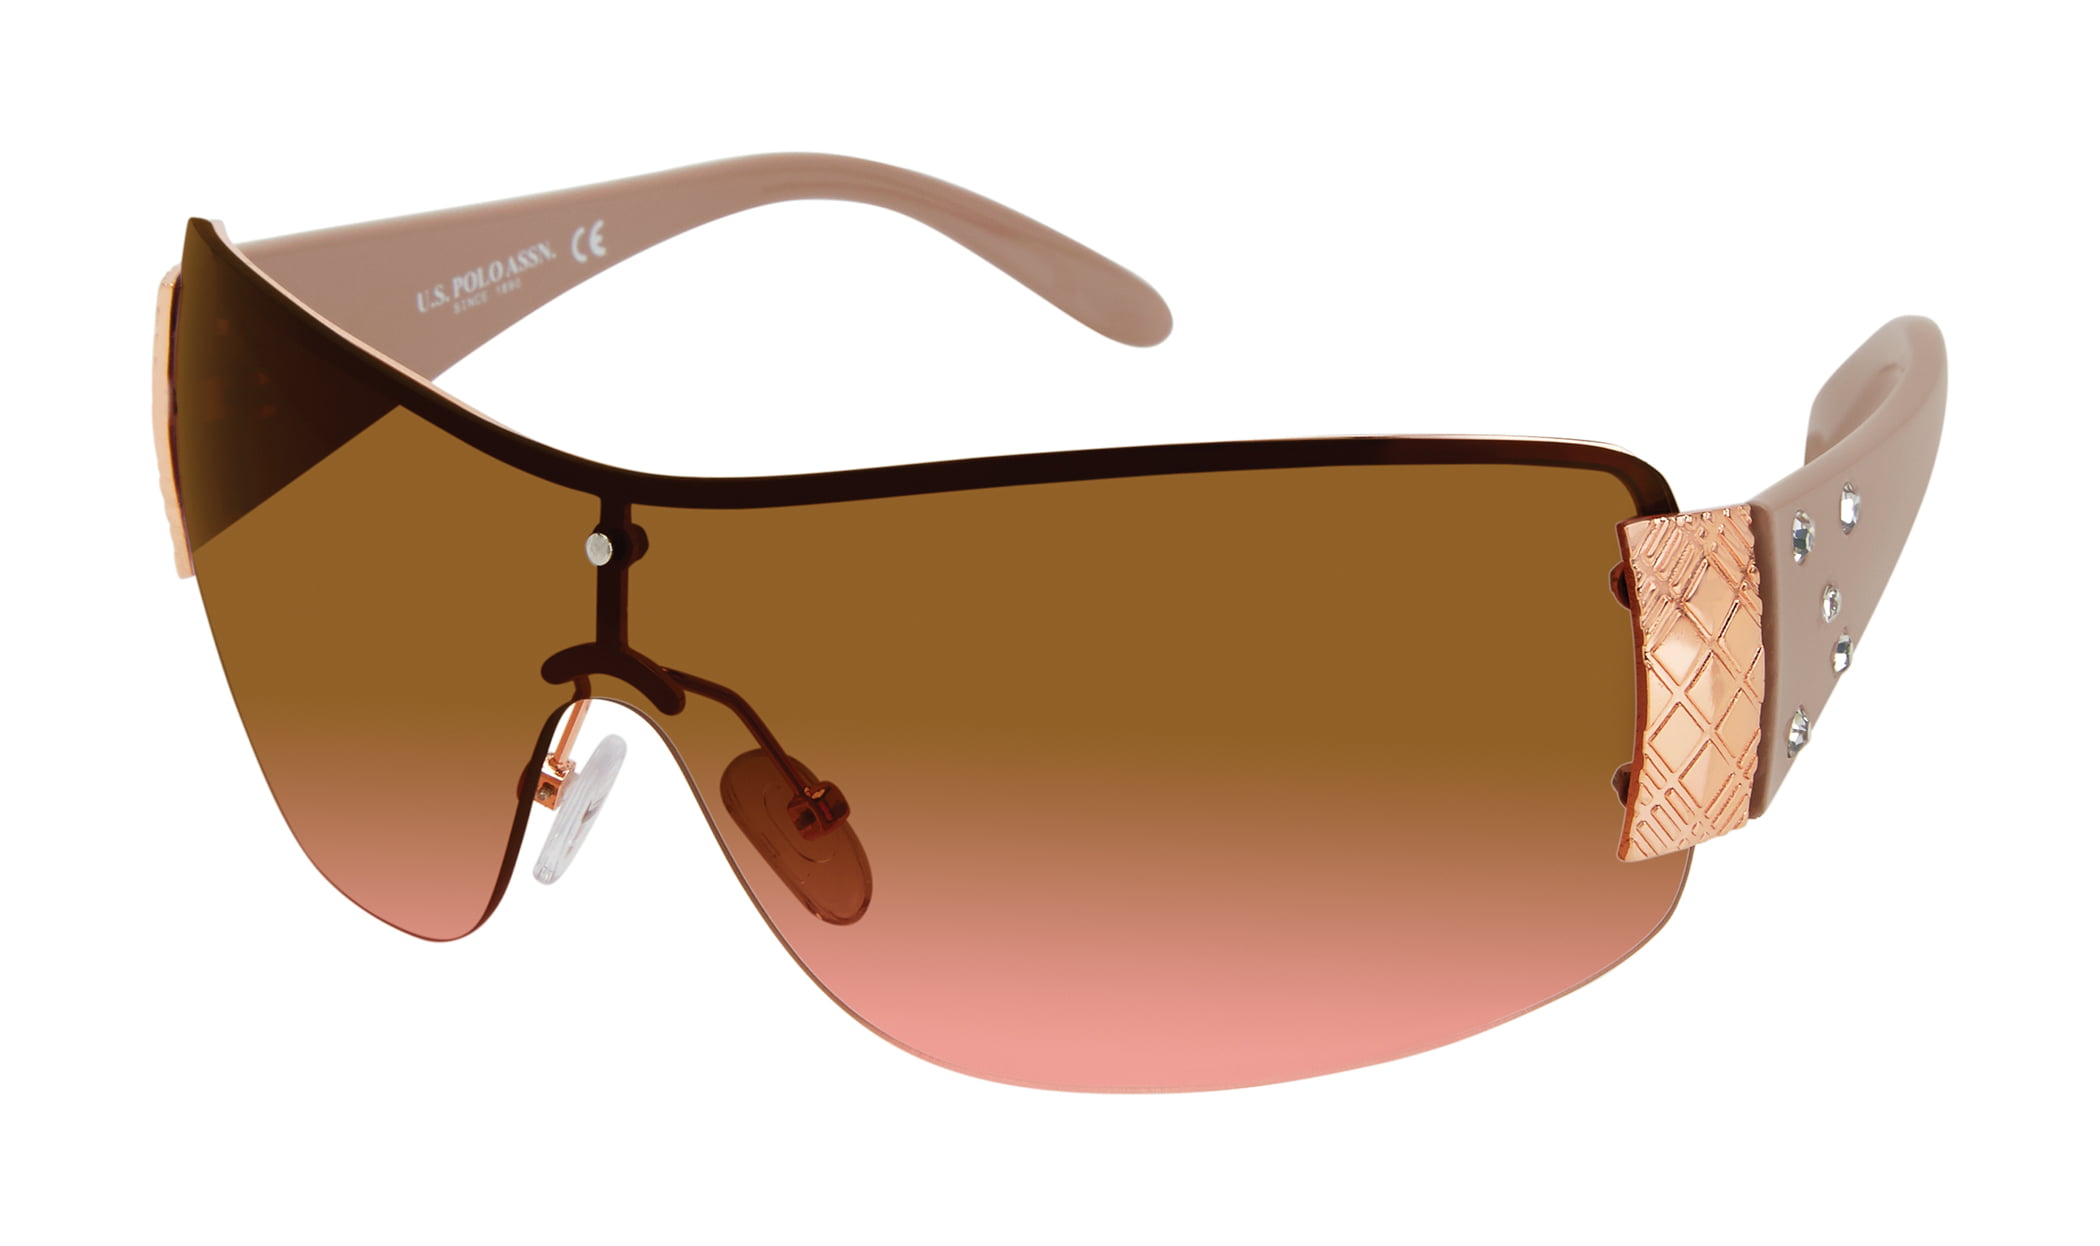 Brand new polarized women Sunglasses with Rhinestones 100%UV protection rs1907 